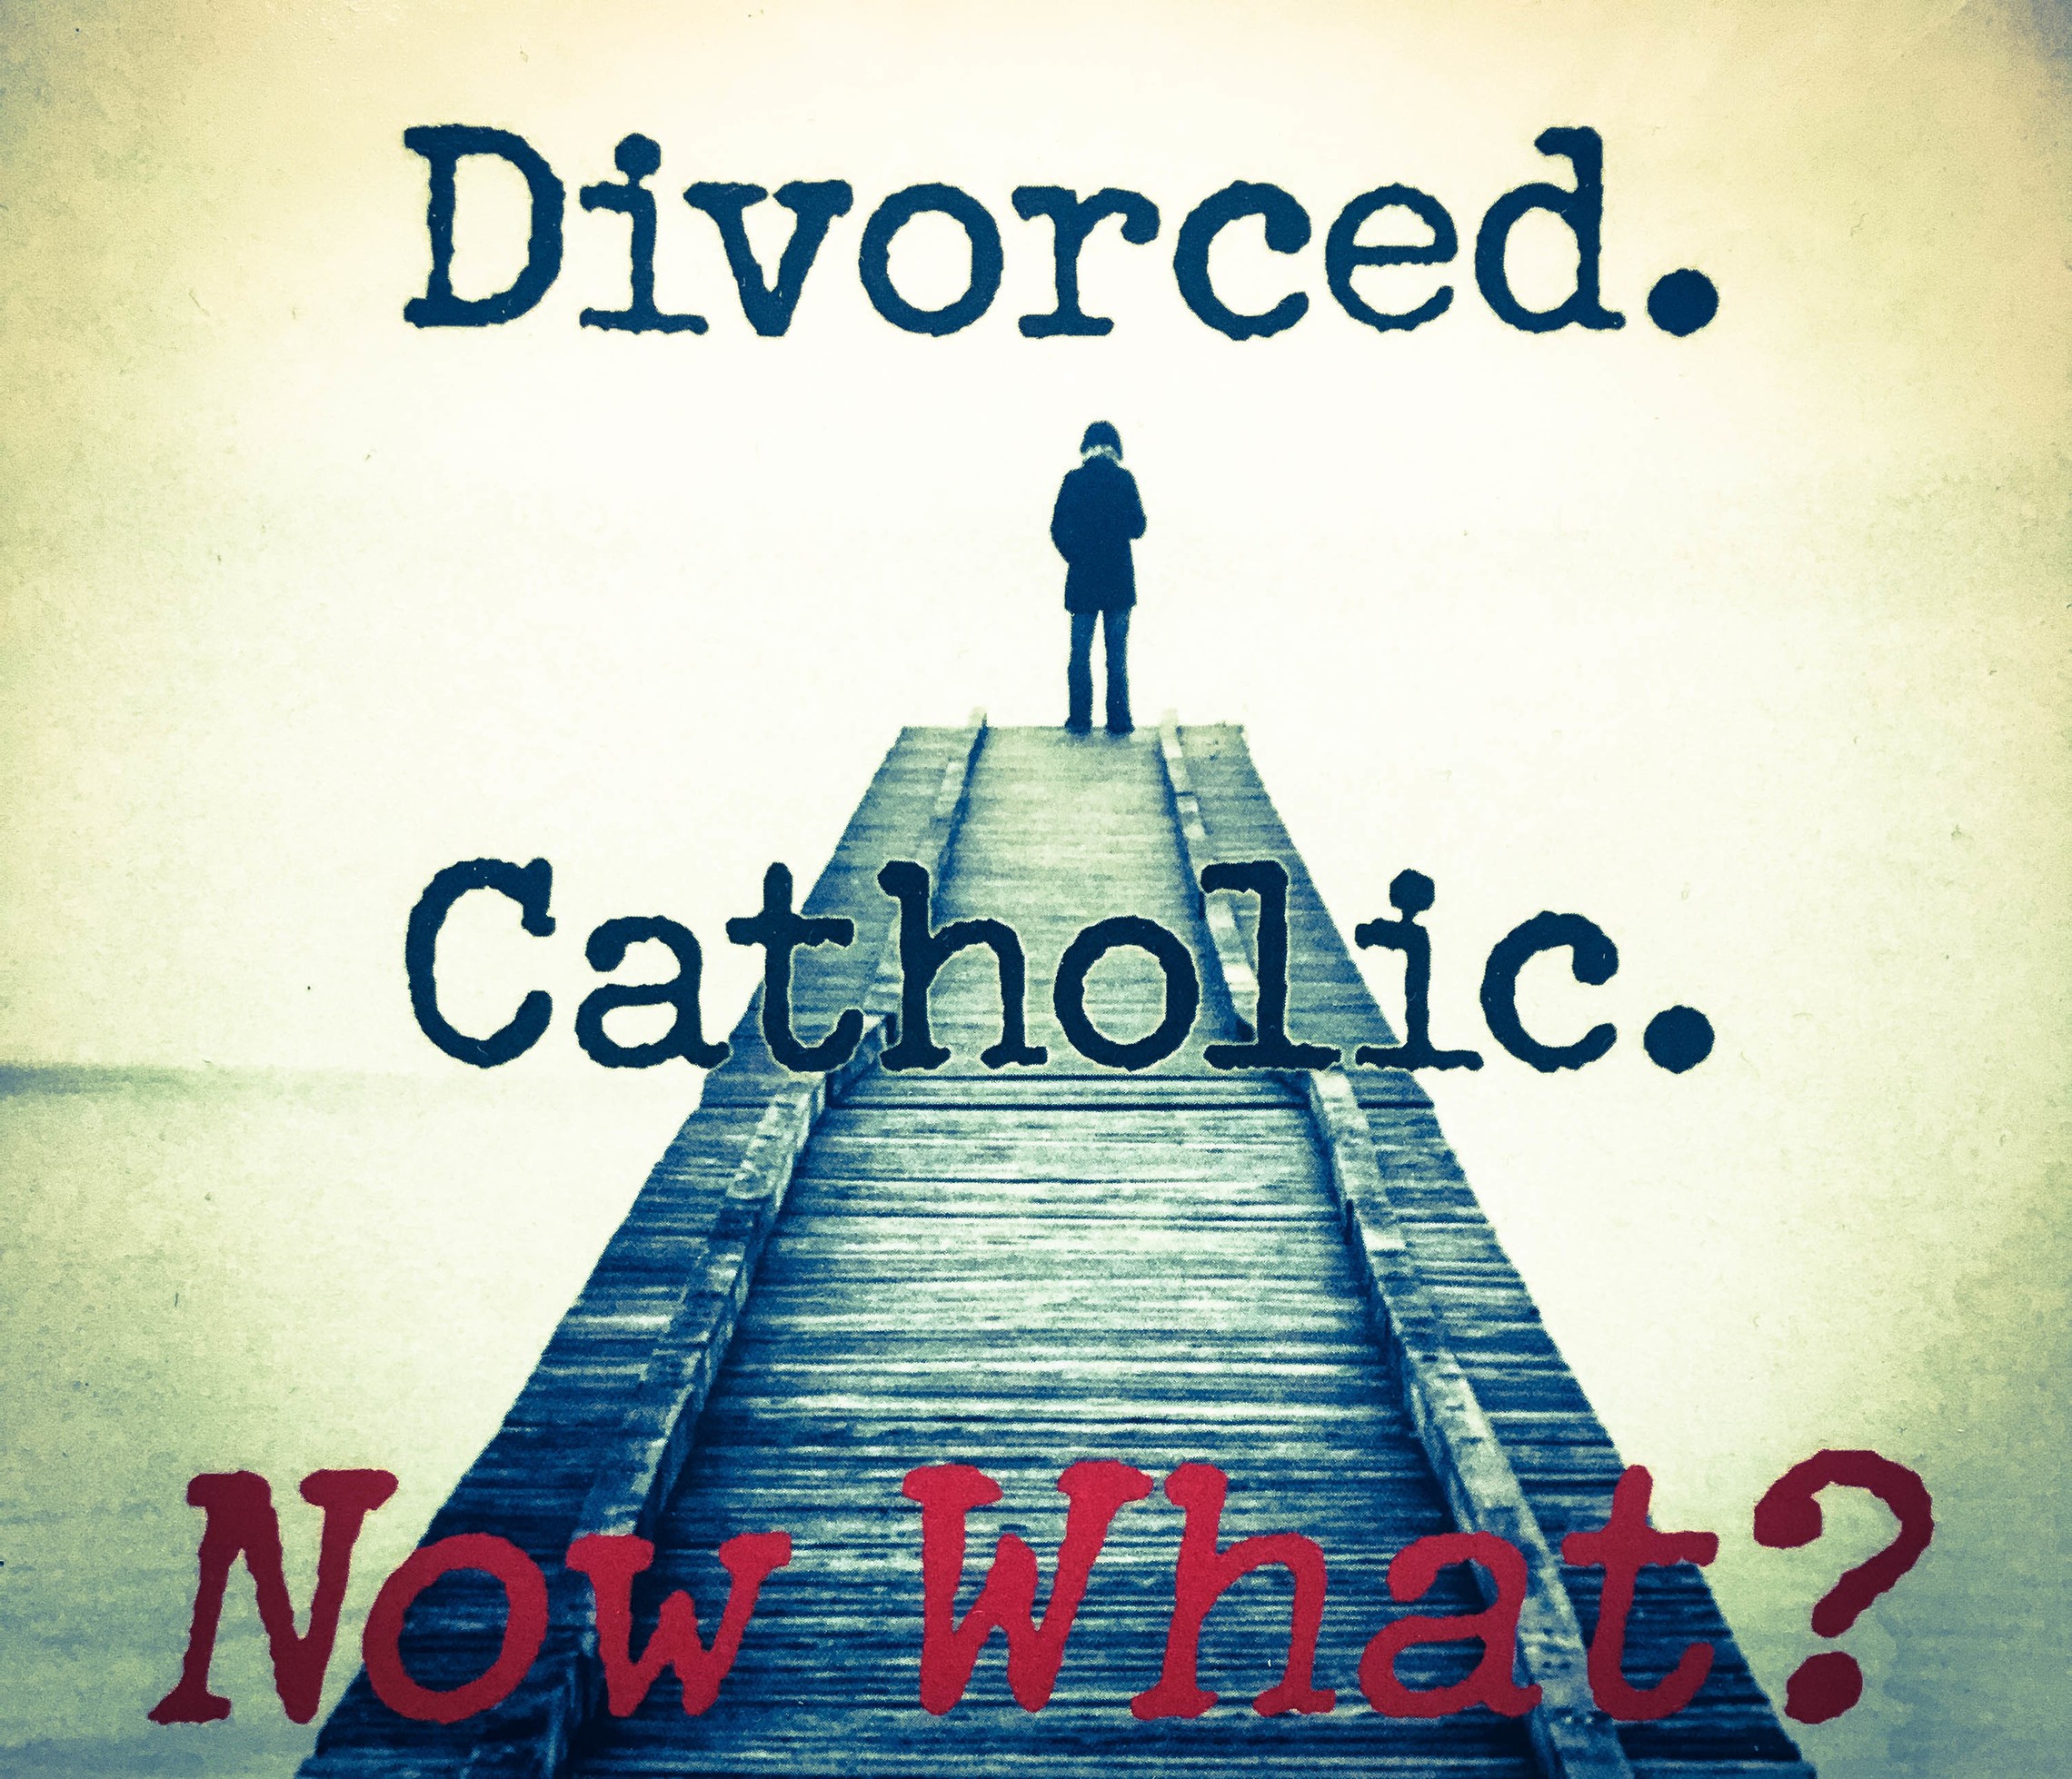 reddit christian divorce